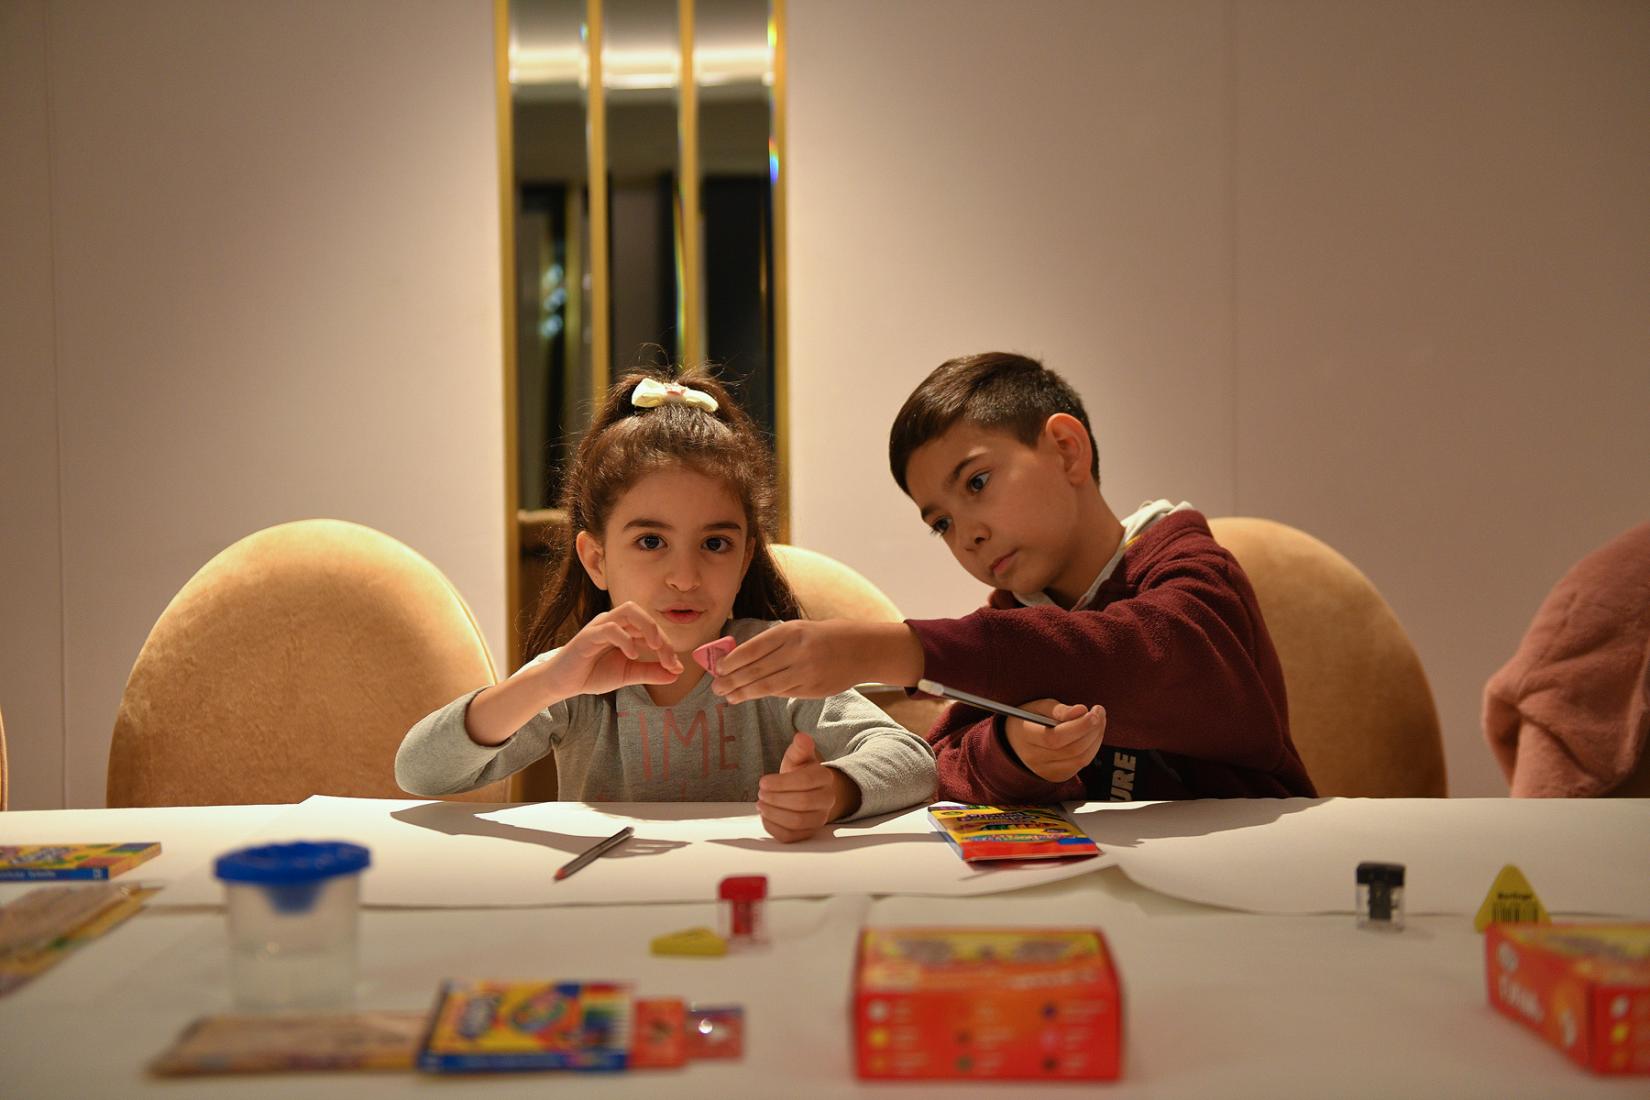 A boy handles an eraser to the girl sitting next to him.